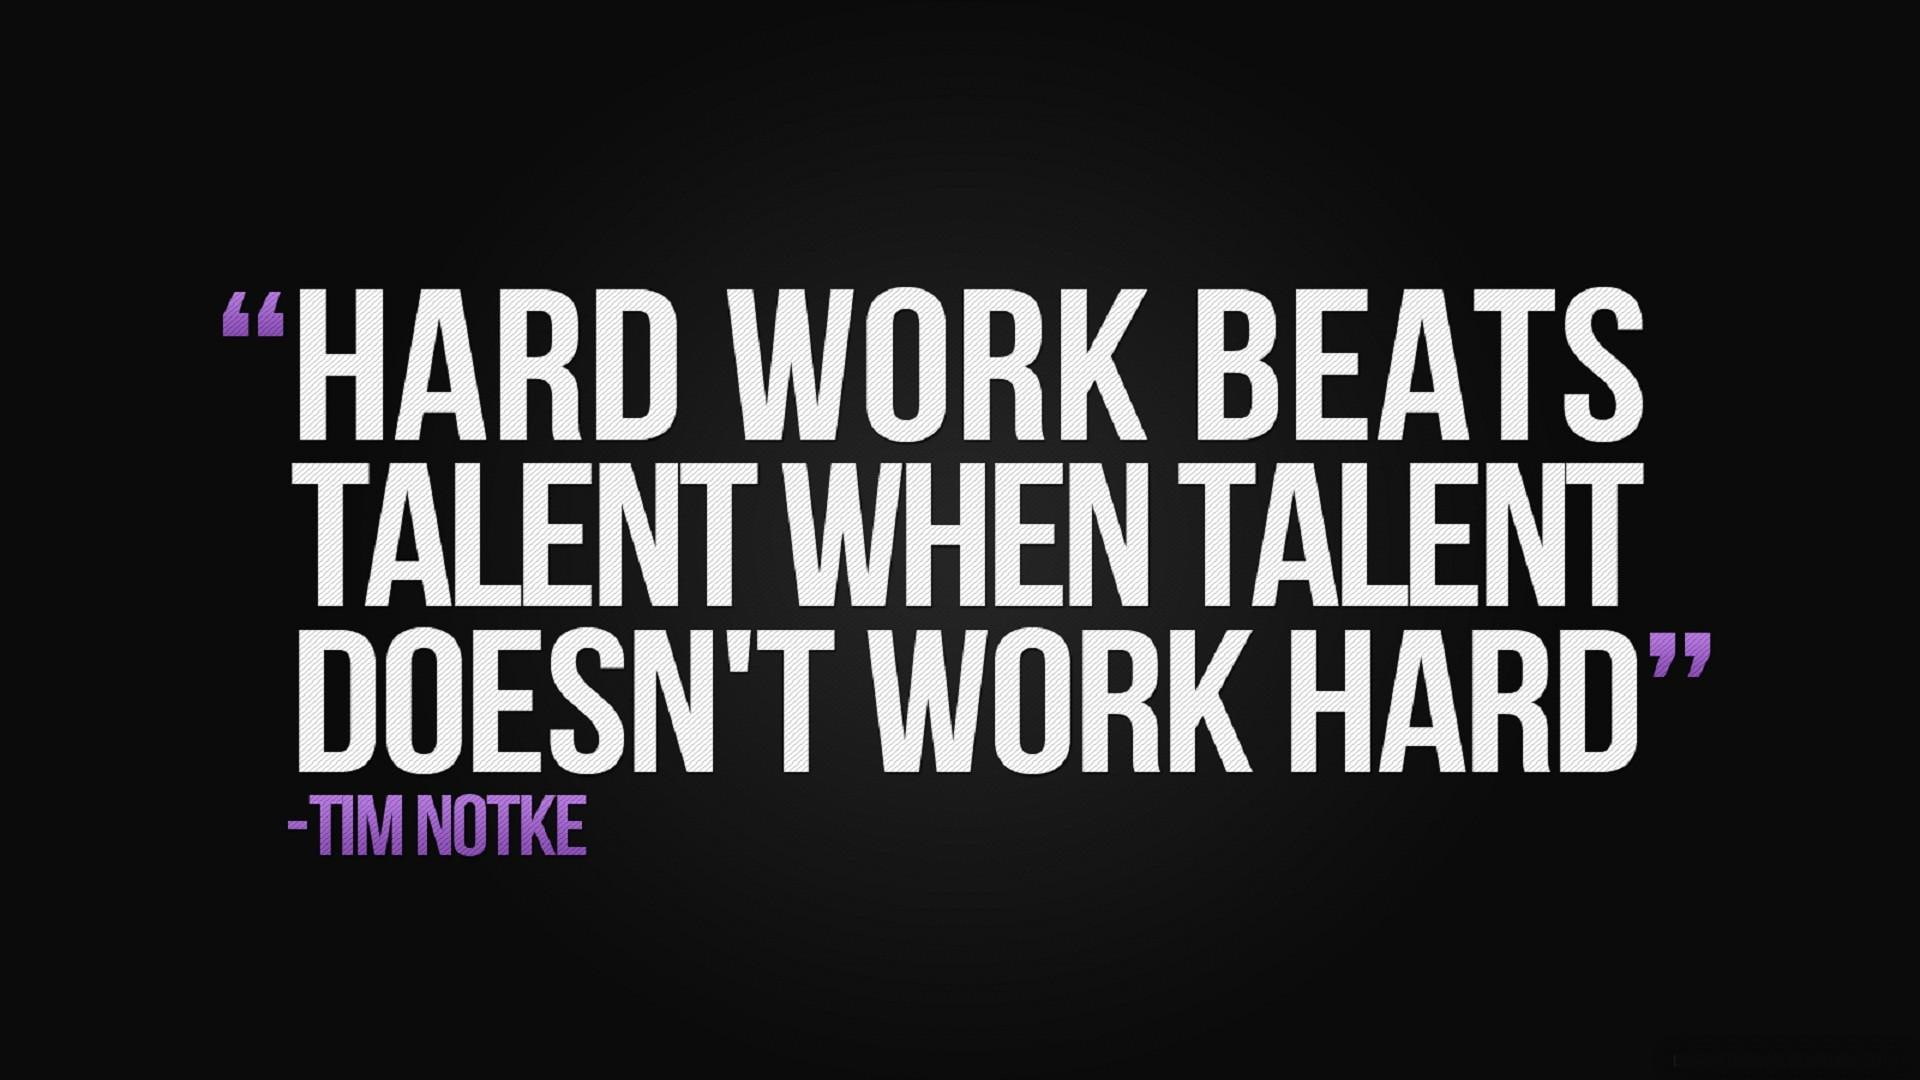 Tim Notke quote, hard work beats talent when talent doens't work hard